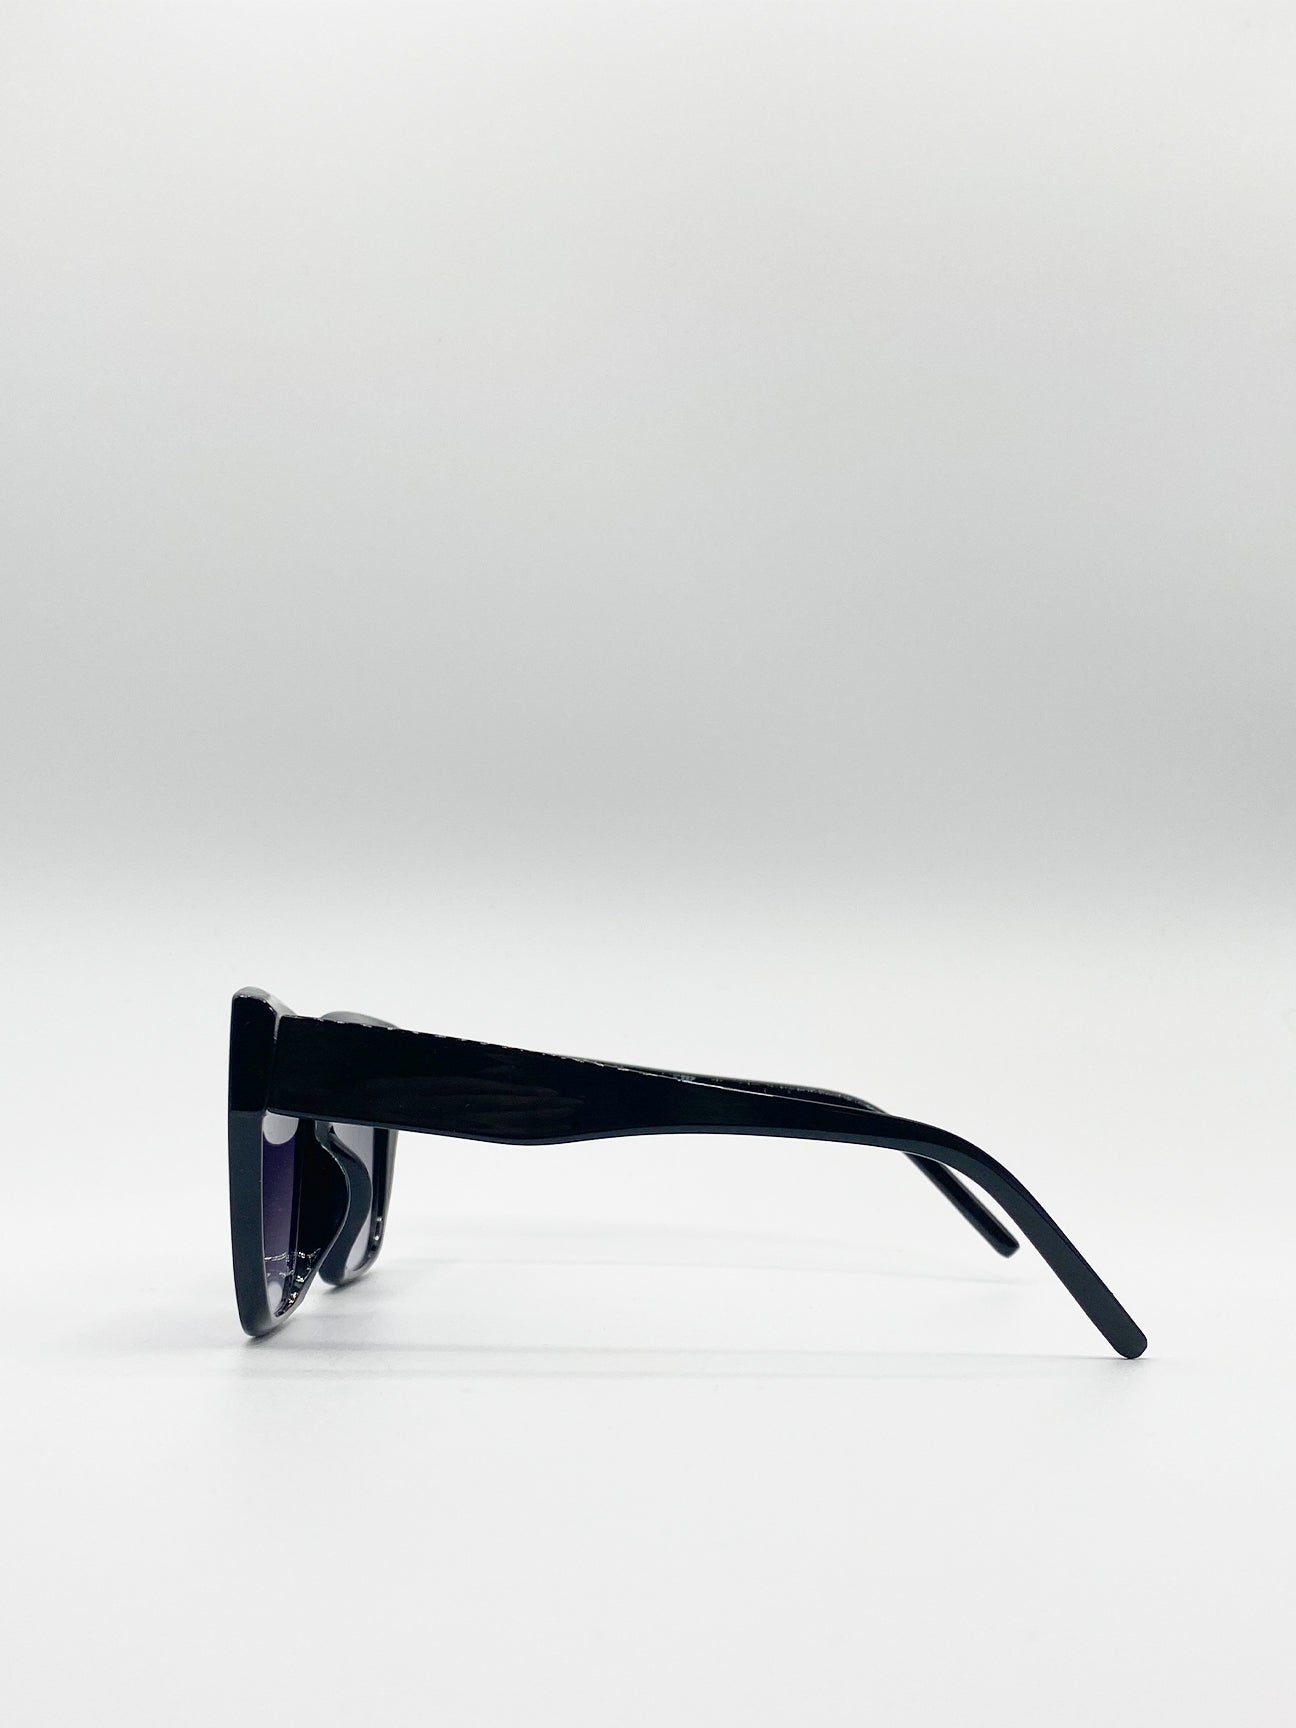 Cateye Sunglasses In Black